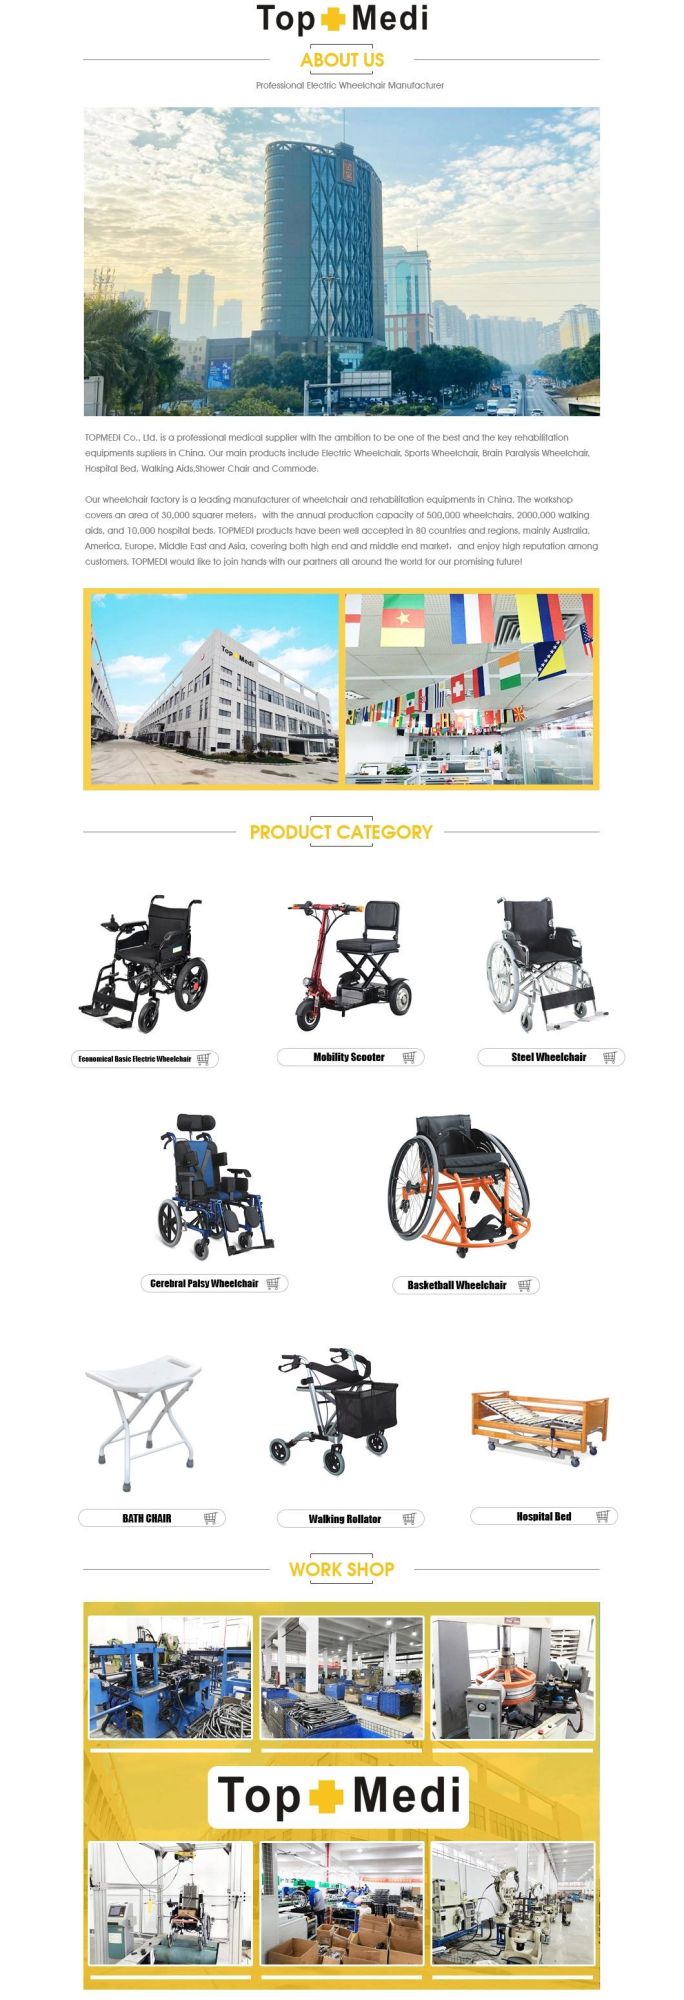 Topmedi Disc Brake Wheelchair Electric Handcycle Wheelchair Trailer Attachment